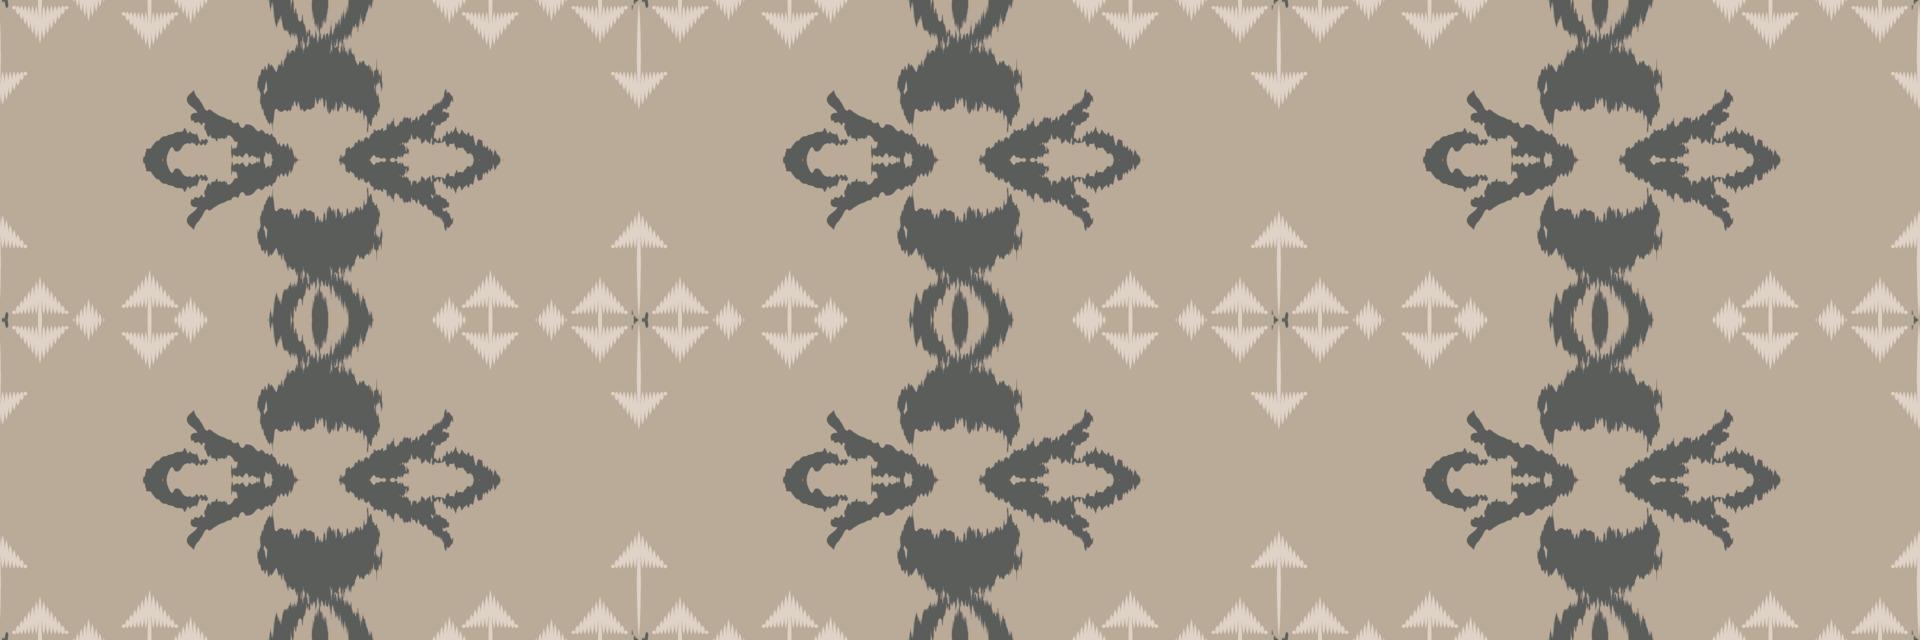 Batik Textile Ethnic ikat flower seamless pattern digital vector design for Print saree Kurti Borneo Fabric border brush symbols swatches stylish